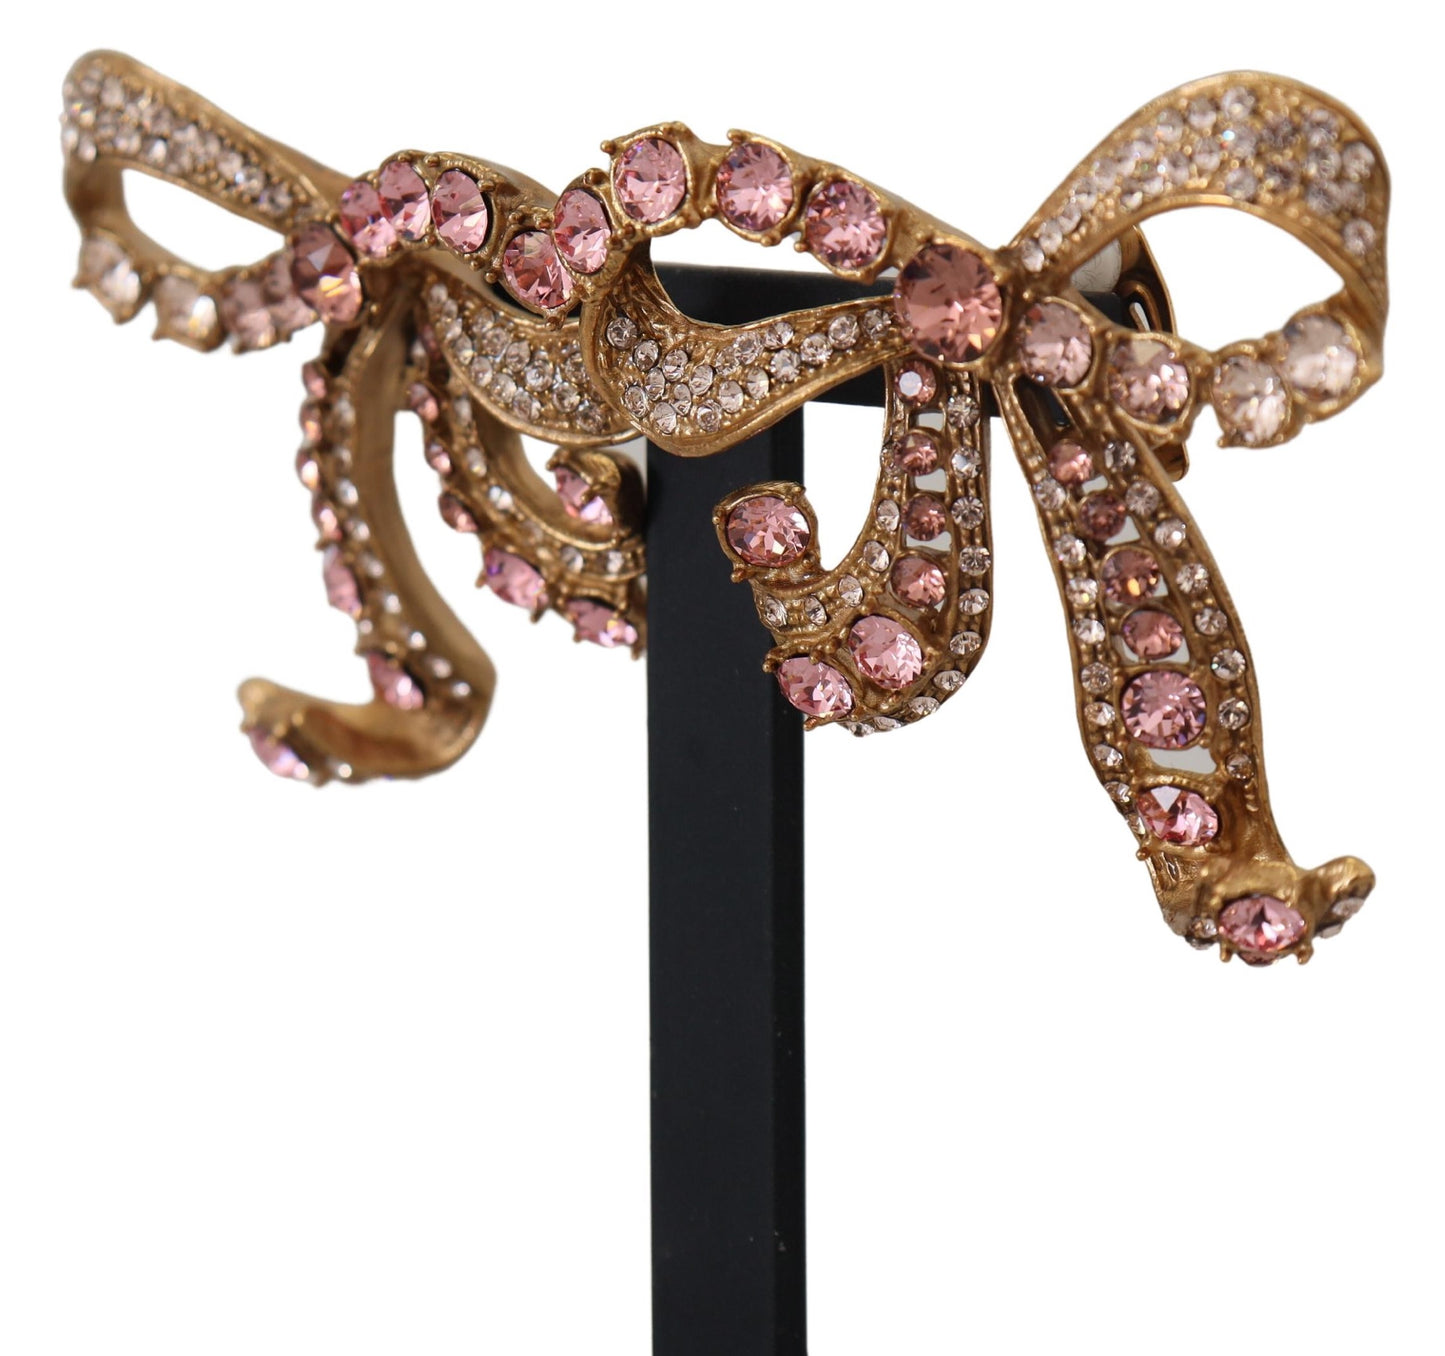 Elegant Gold-Toned Bow Clip Earrings